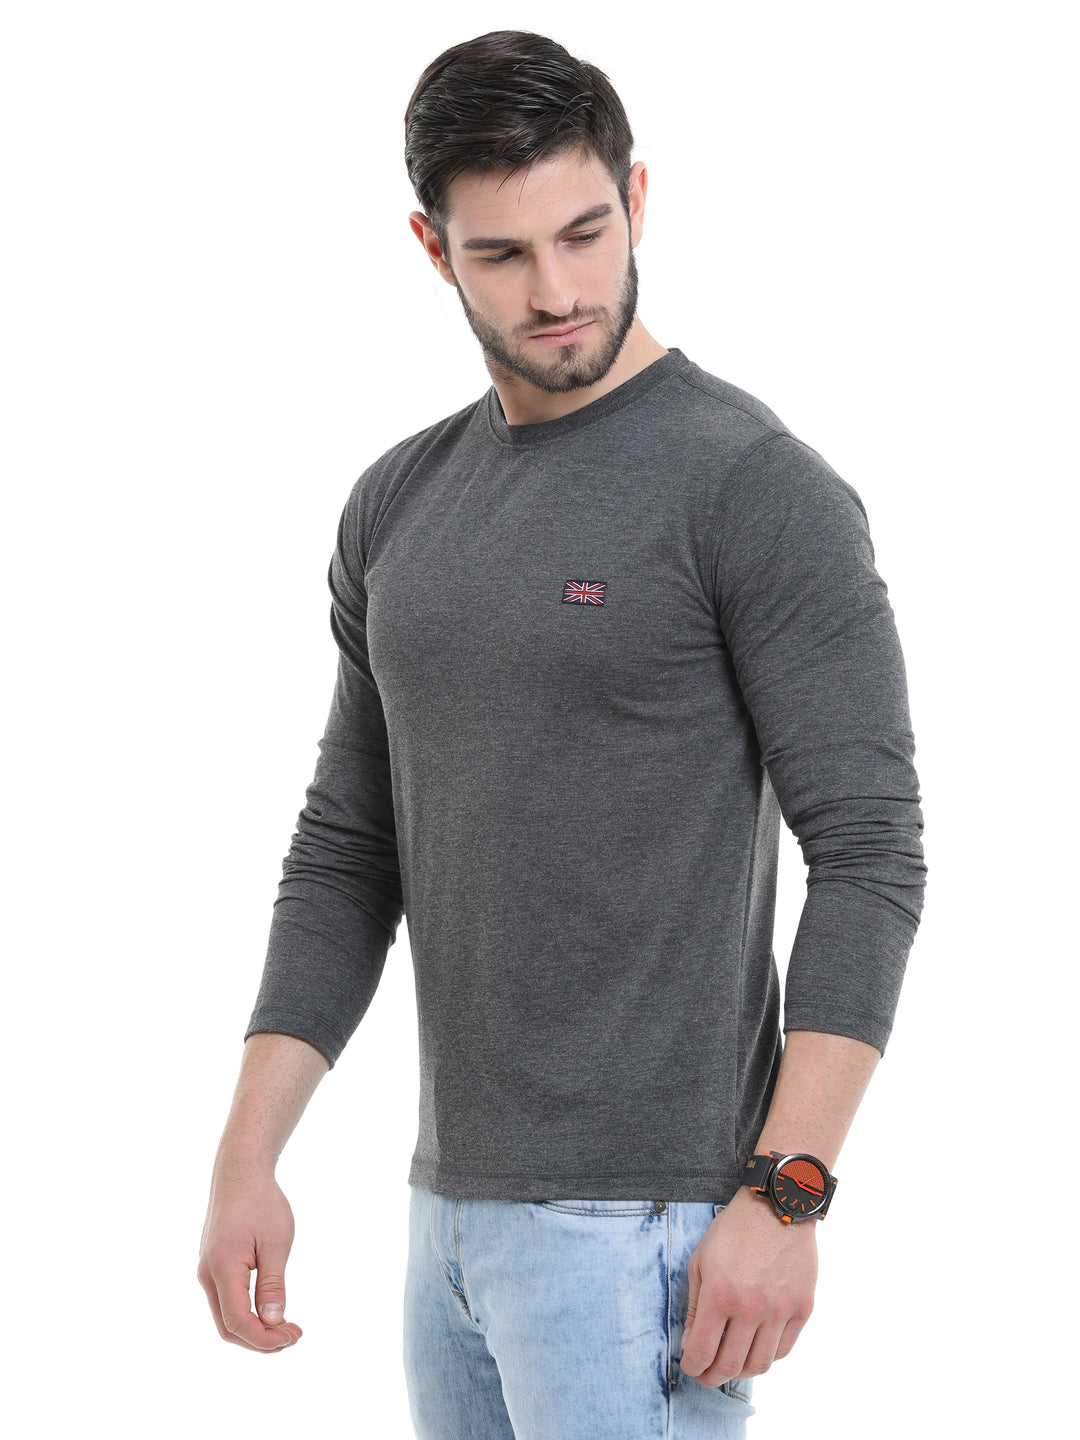 Long Sleeve T-Shirt (Charcoal Melange)